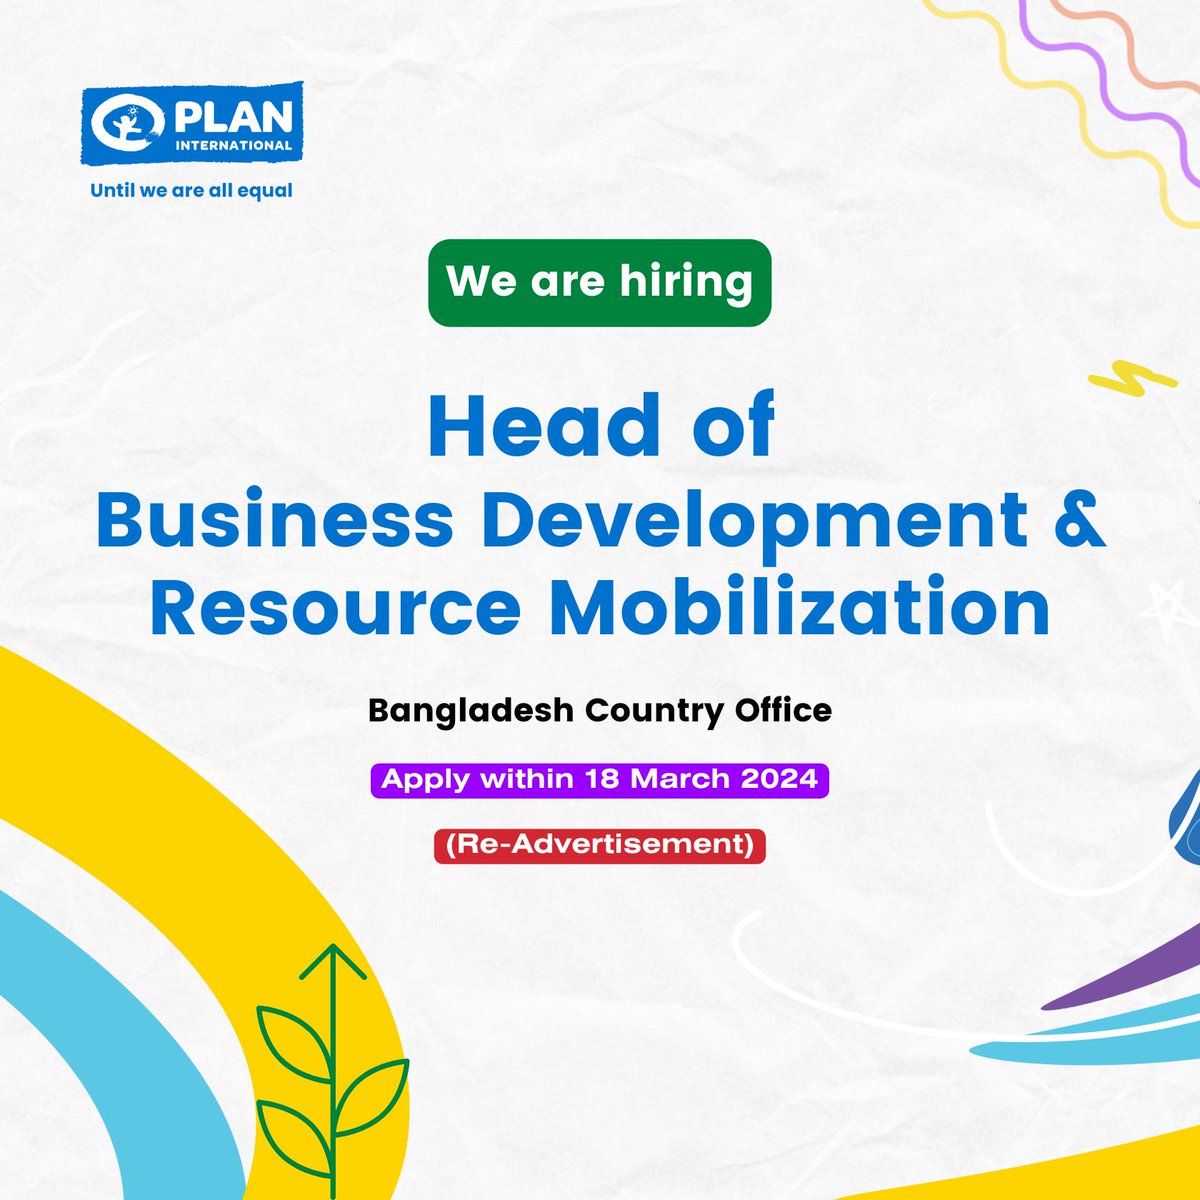 𝐕𝐚𝐜𝐚𝐧𝐜𝐲 𝐀𝐧𝐧𝐨𝐮𝐧𝐜𝐞𝐦𝐞𝐧𝐭! Position: 𝐇𝐞𝐚𝐝 𝐨𝐟 𝐁𝐮𝐬𝐢𝐧𝐞𝐬𝐬 𝐃𝐞𝐯𝐞𝐥𝐨𝐩𝐦𝐞𝐧𝐭 & 𝐑𝐞𝐬𝐨𝐮𝐫𝐜𝐞 𝐌𝐨𝐛𝐢𝐥𝐢𝐳𝐚𝐭𝐢𝐨𝐧 Location: Dhaka Application Deadline: 𝟏 𝟖 𝐌𝐚𝐫𝐜𝐡 𝟐𝟎𝟐𝟑 For details, follow the link- jobs.bdjobs.com/jobdetails.asp…